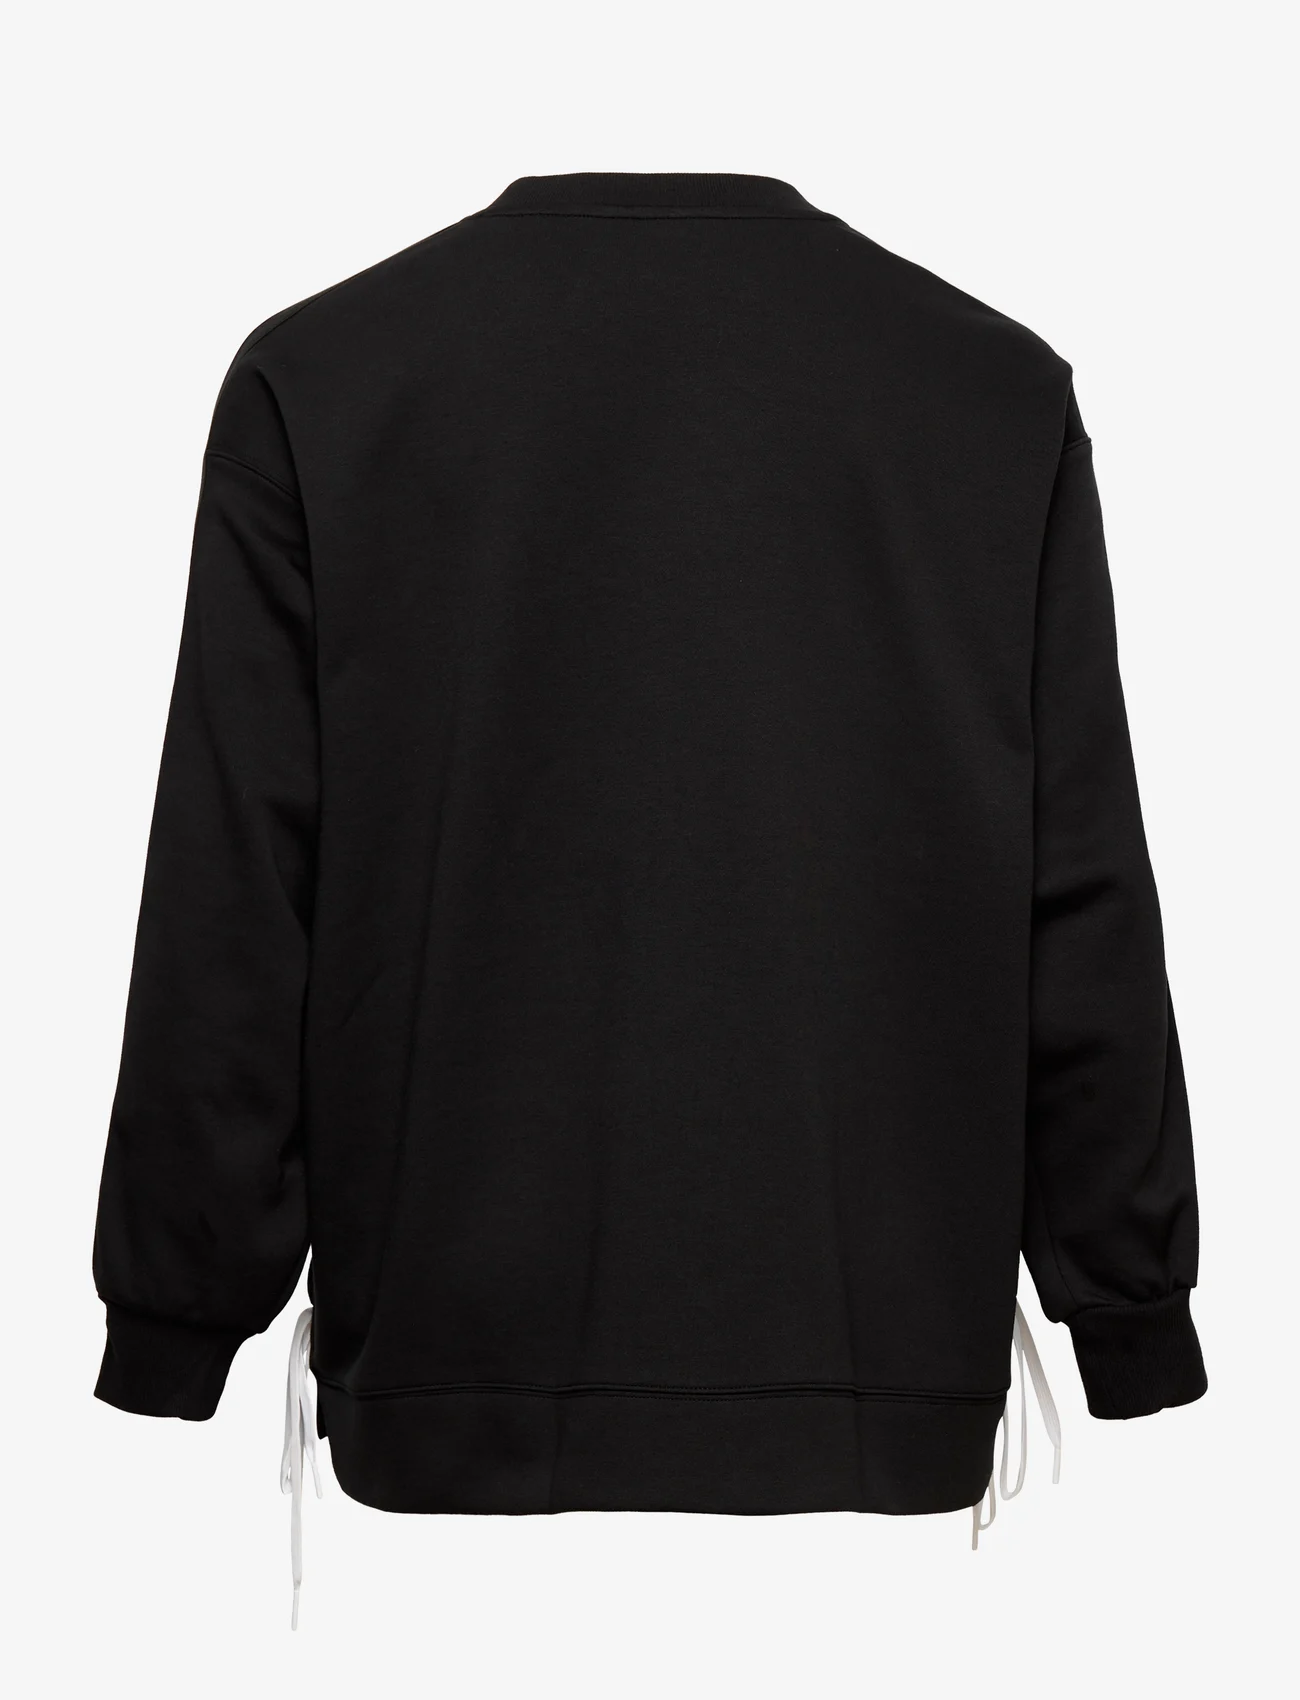 adidas Originals - Always Original Laced Crew Sweatshirt (Plus Size) - damen - black - 1